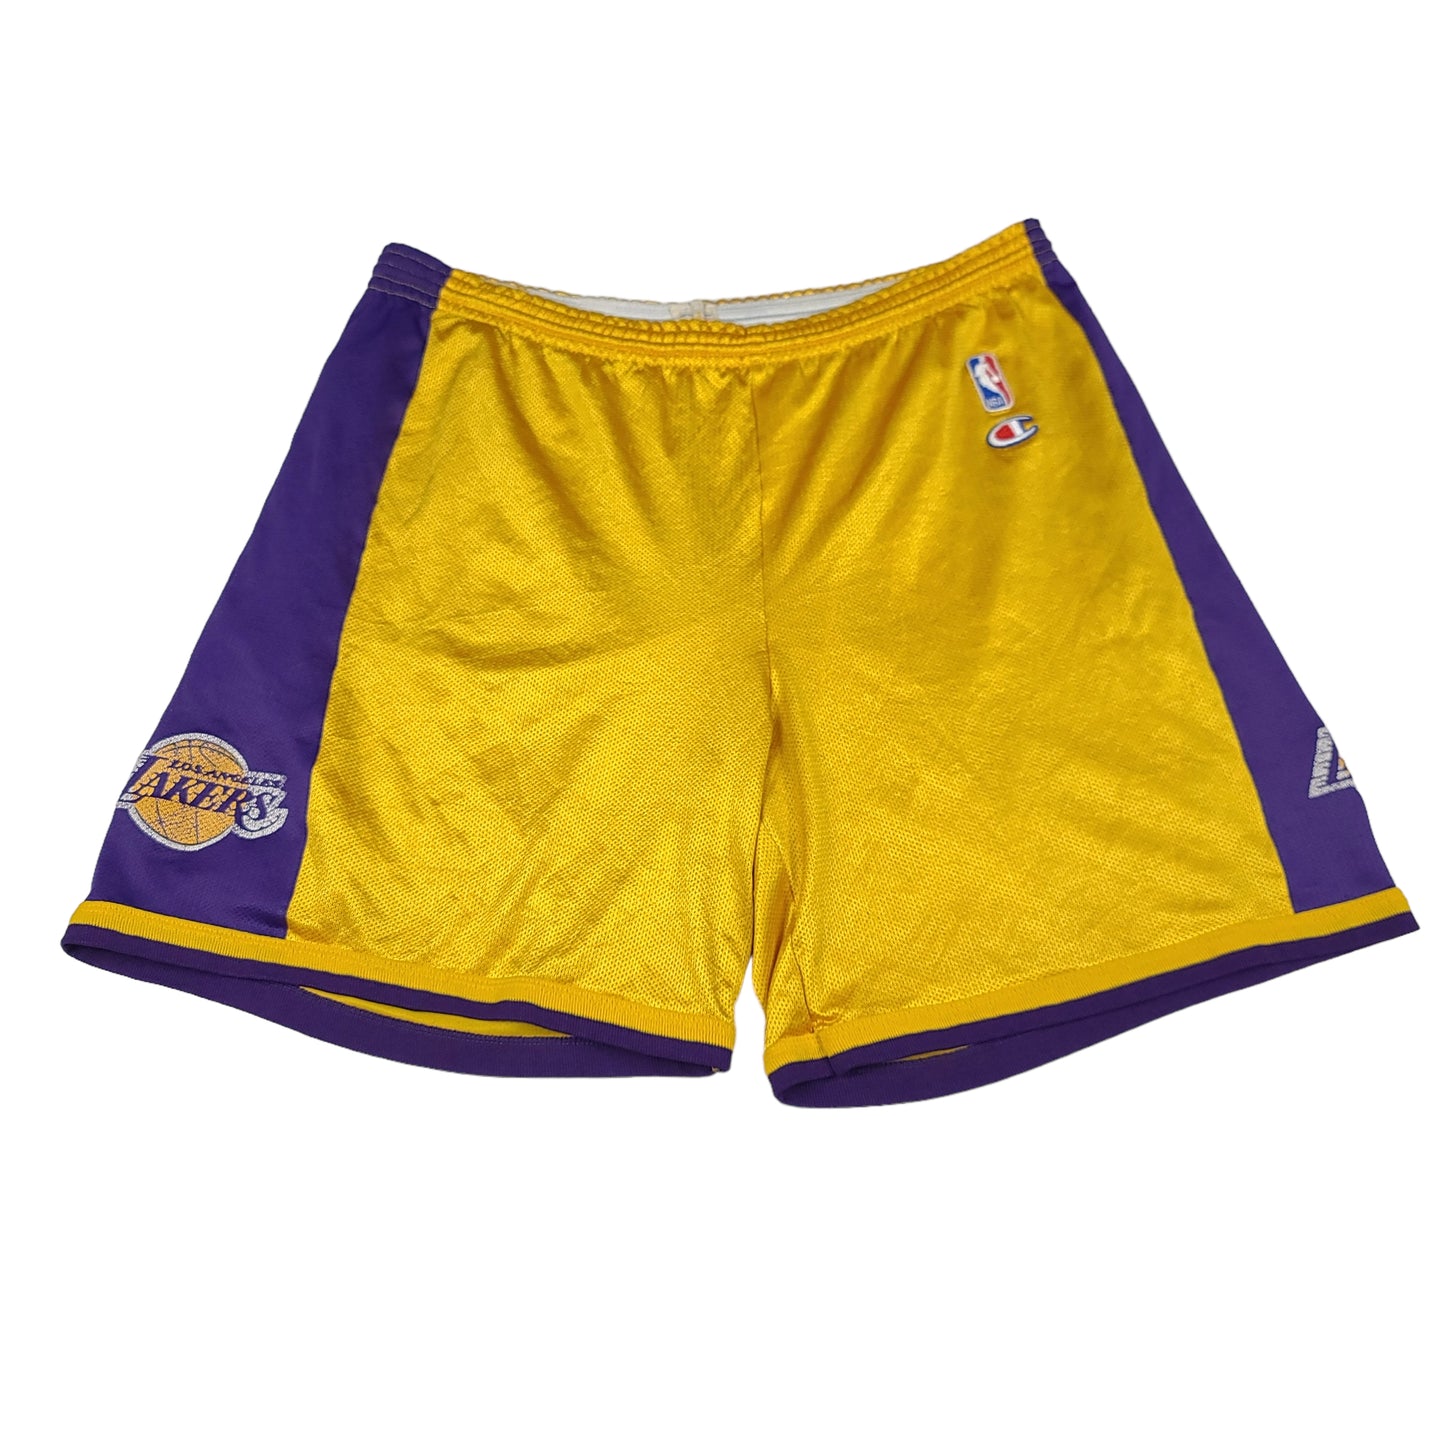 Vintage Los Angeles Lakers Gold & Purple Champion Basketball Shorts